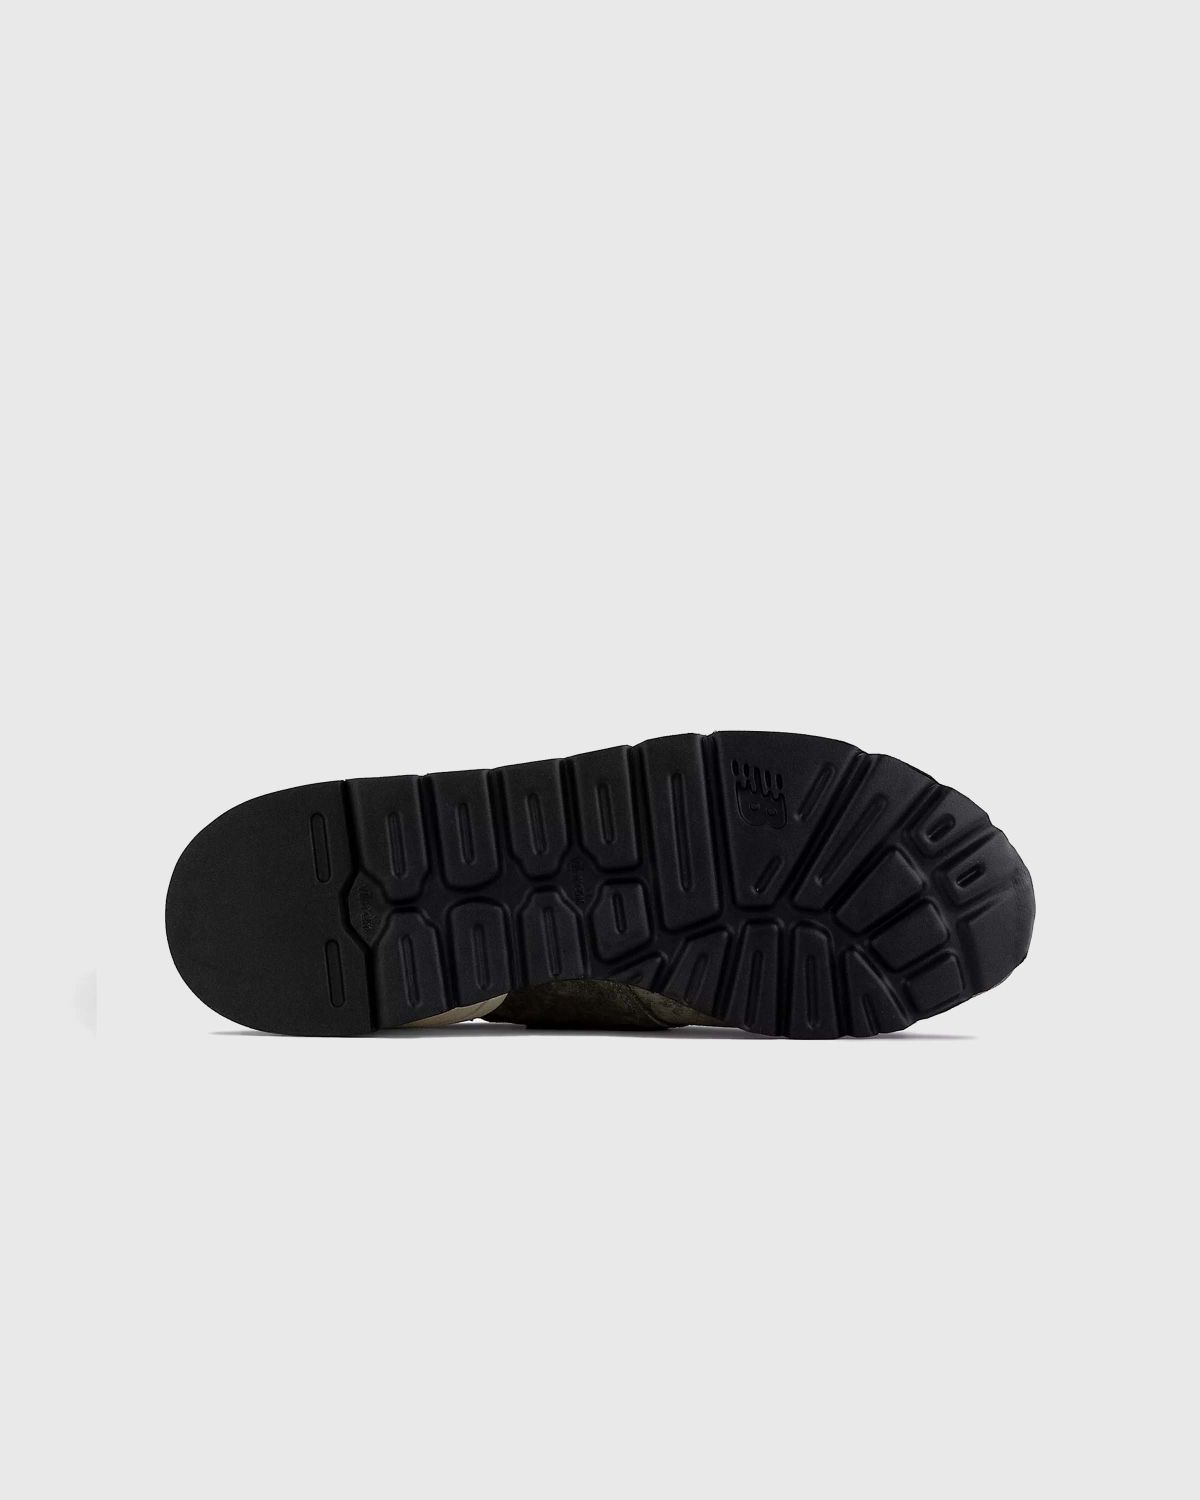 New Balance – M990WG1 Grey - Low Top Sneakers - Grey - Image 6